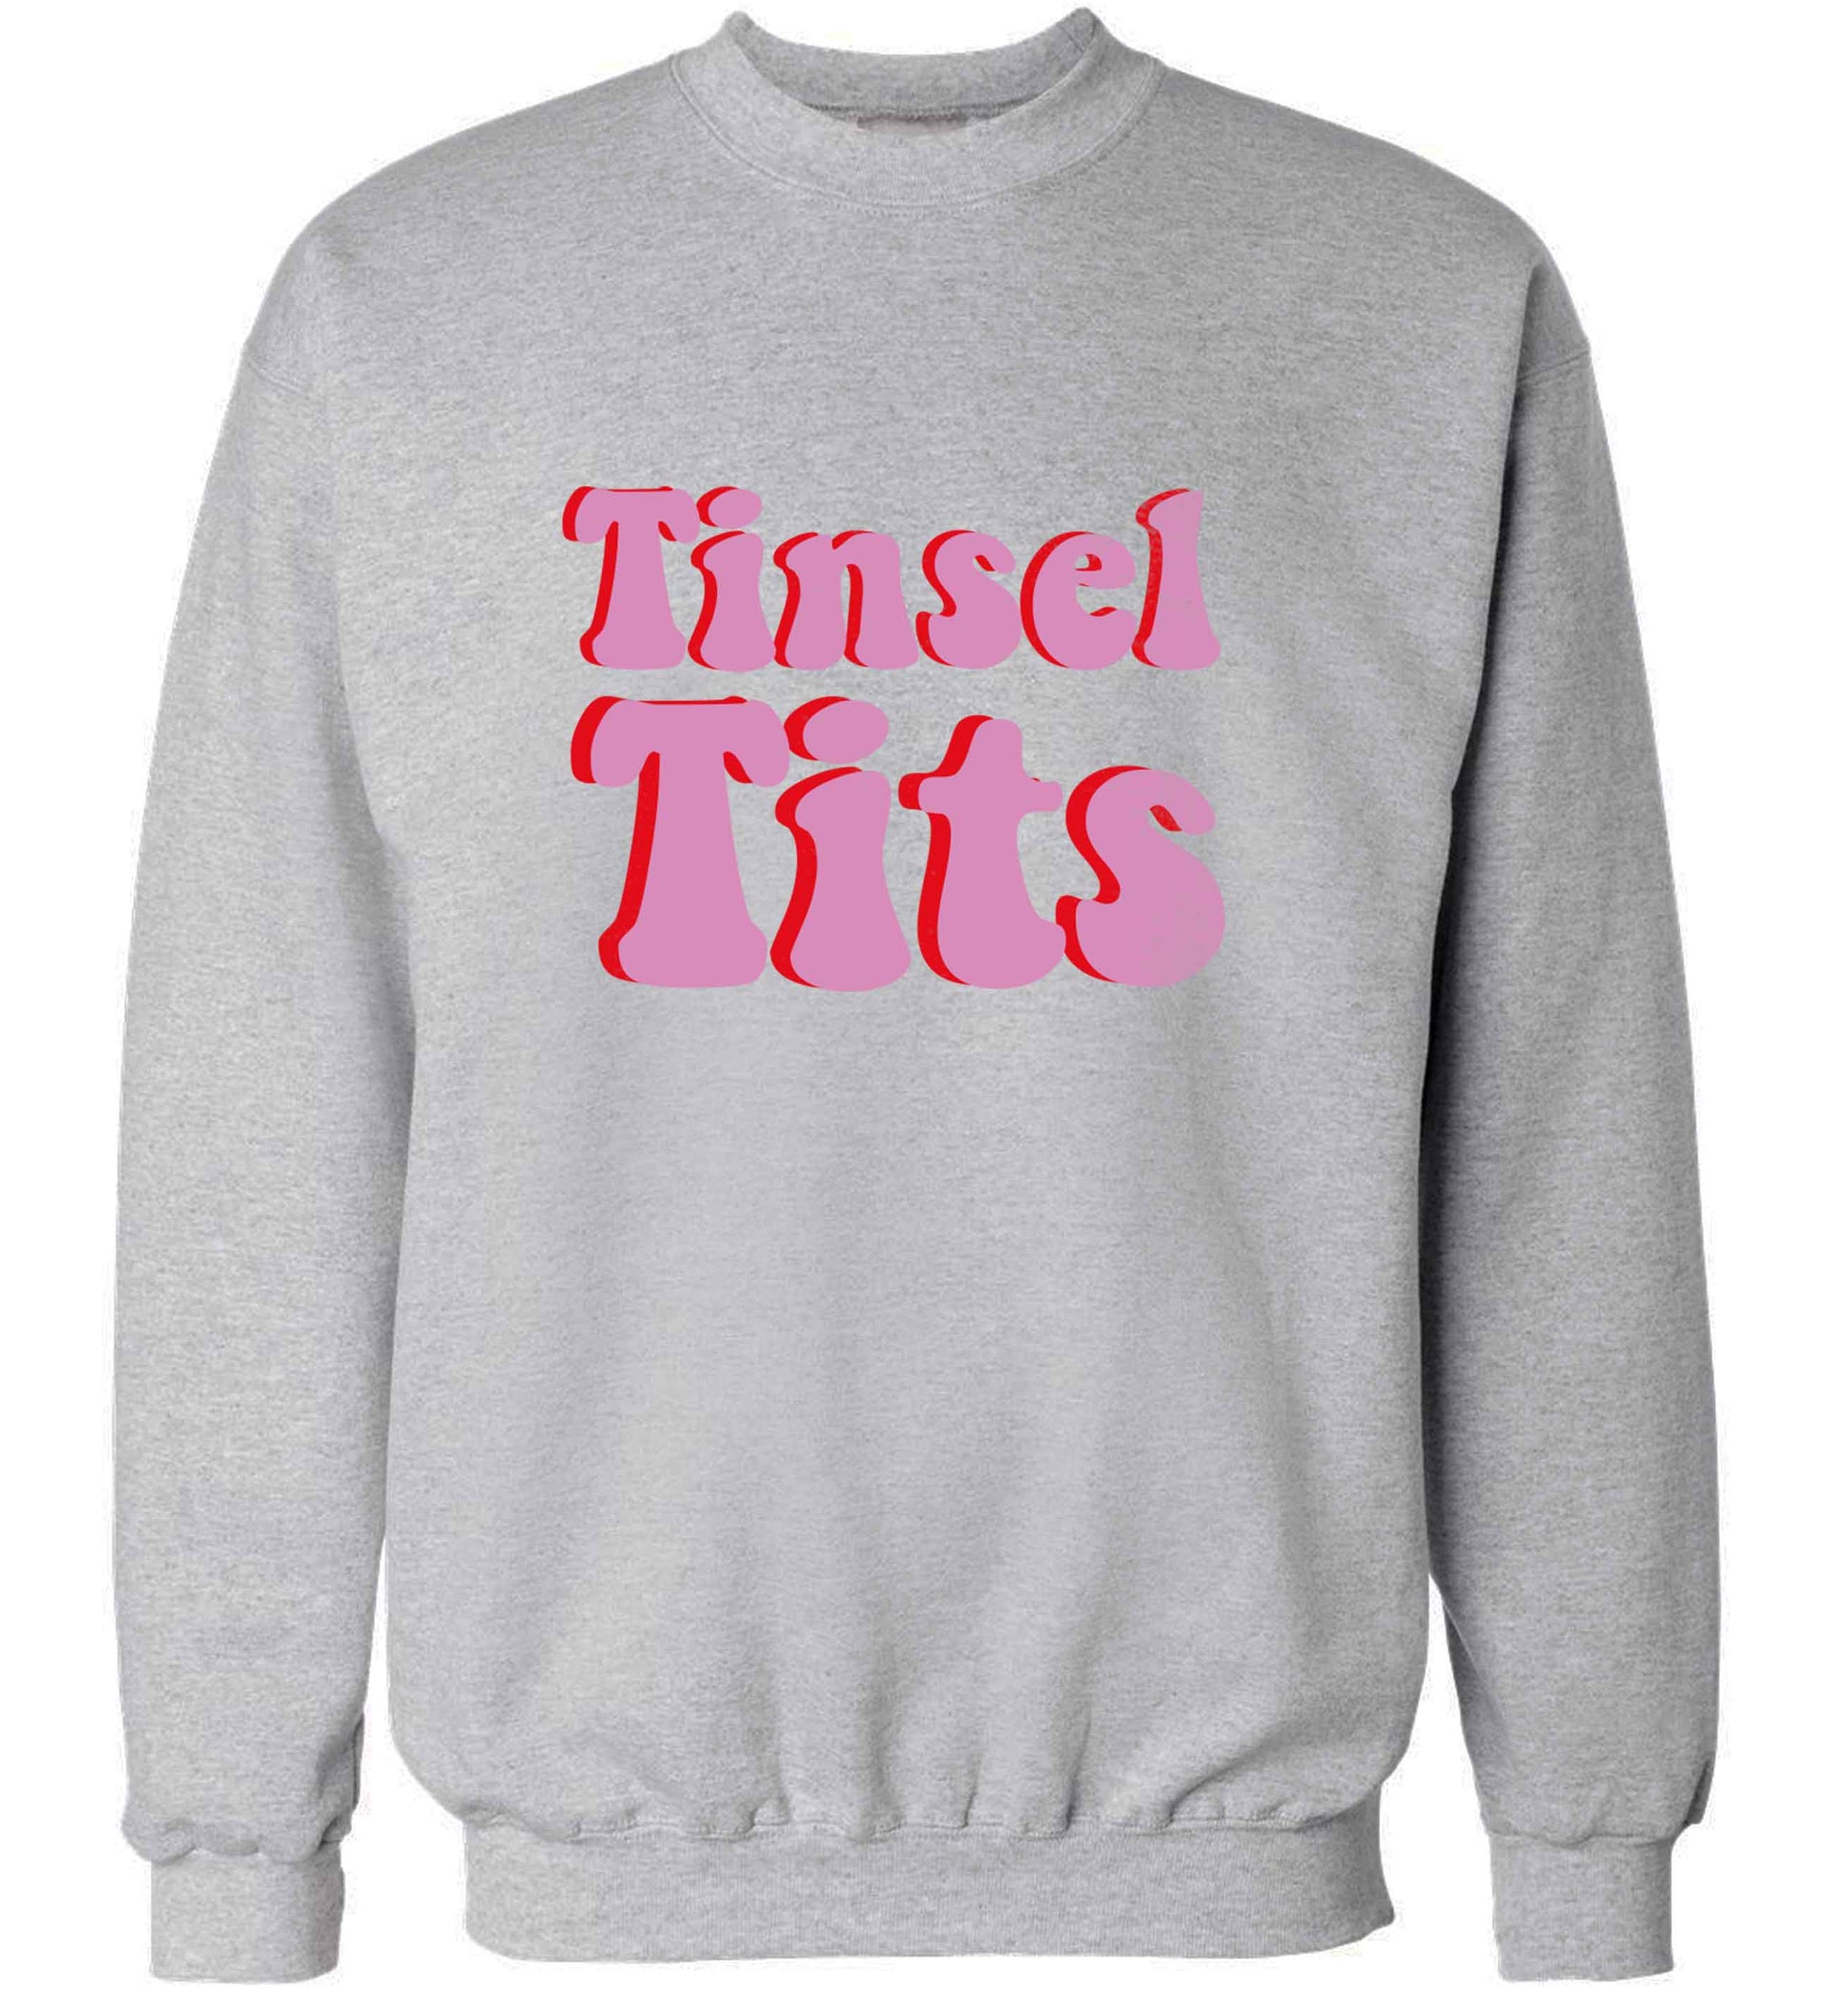 Tinsel tits adult's unisex grey sweater 2XL